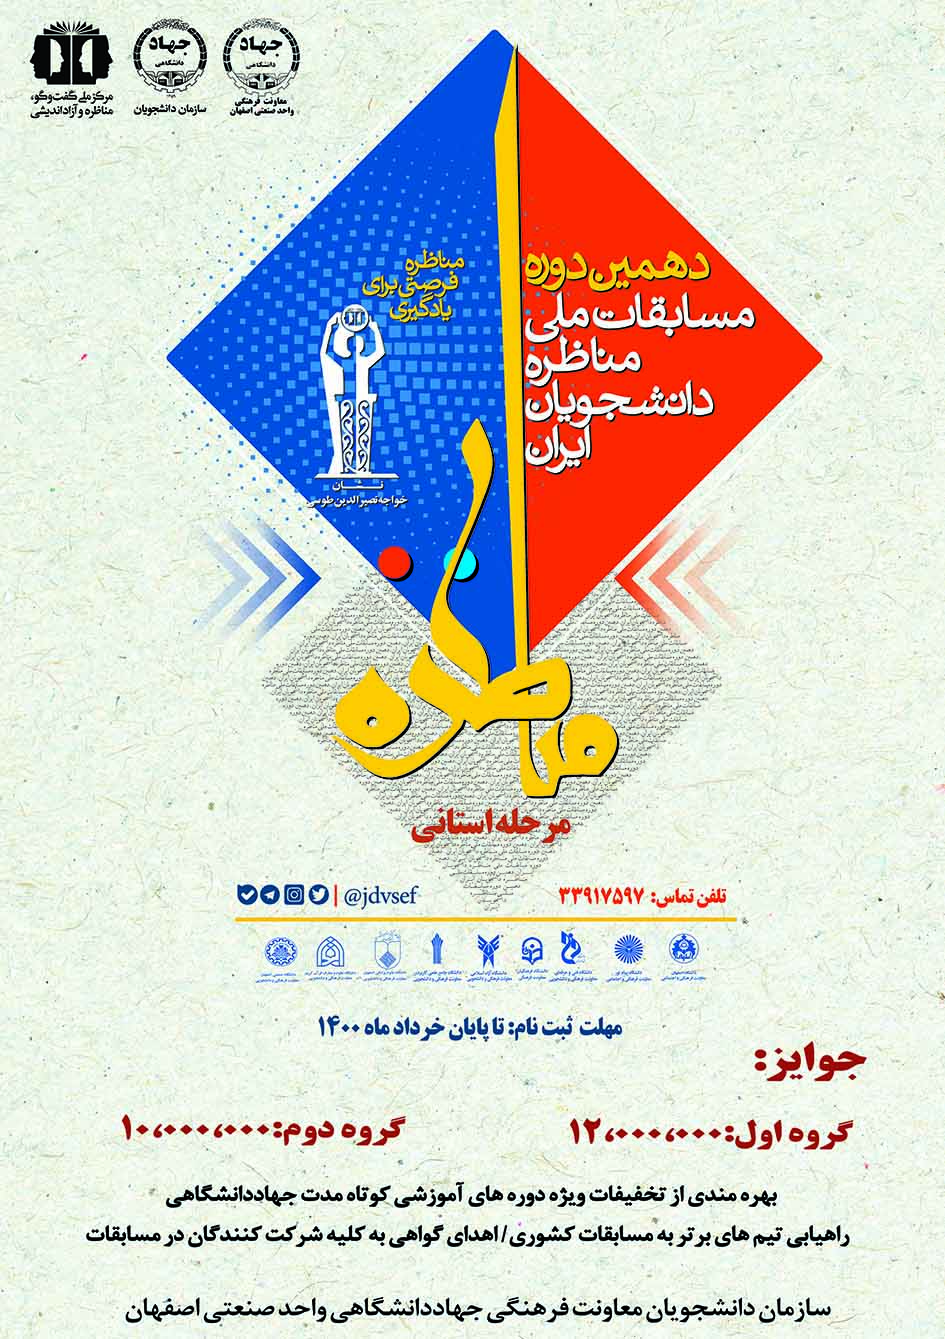 بخش مقدماتی دهمین دوره ملی مناظره دانشجویان ایران